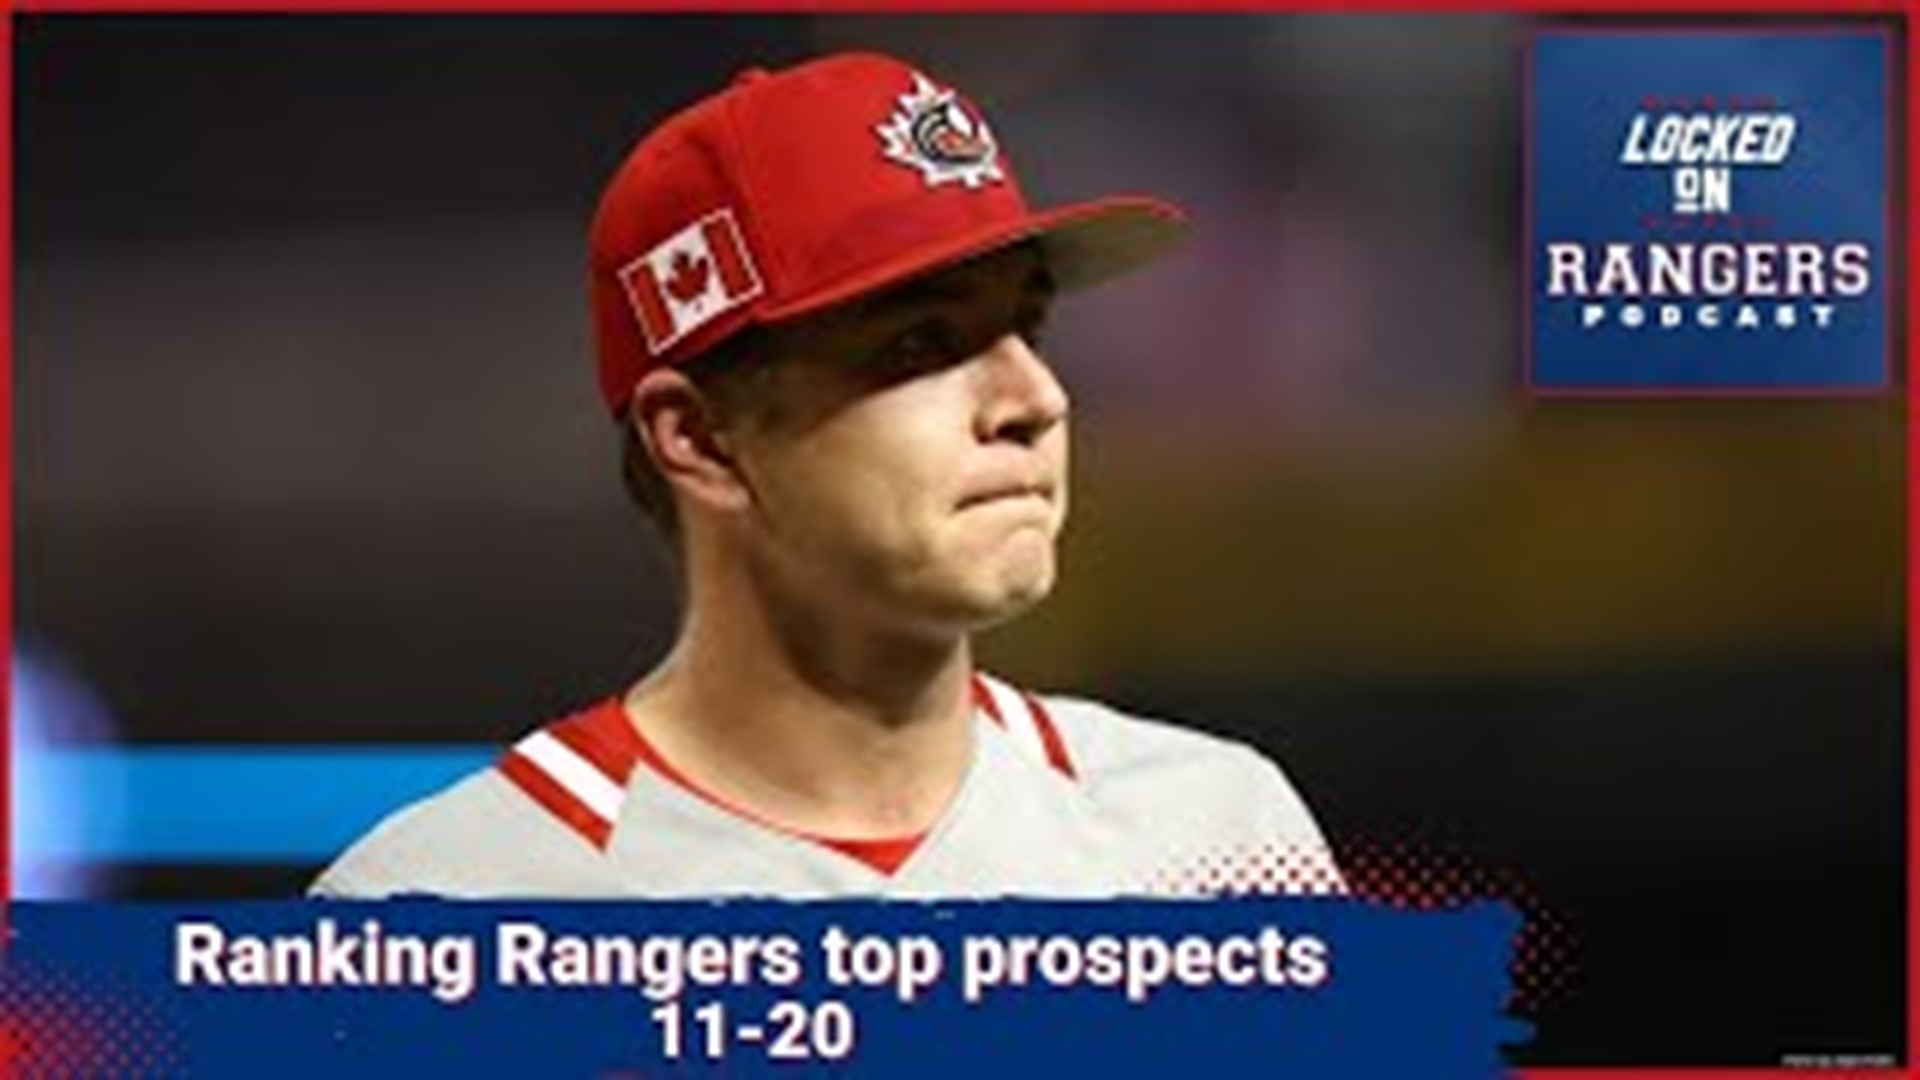 Ranking Texas Rangers' top 30 prospects Is Abimelec Ortiz's season